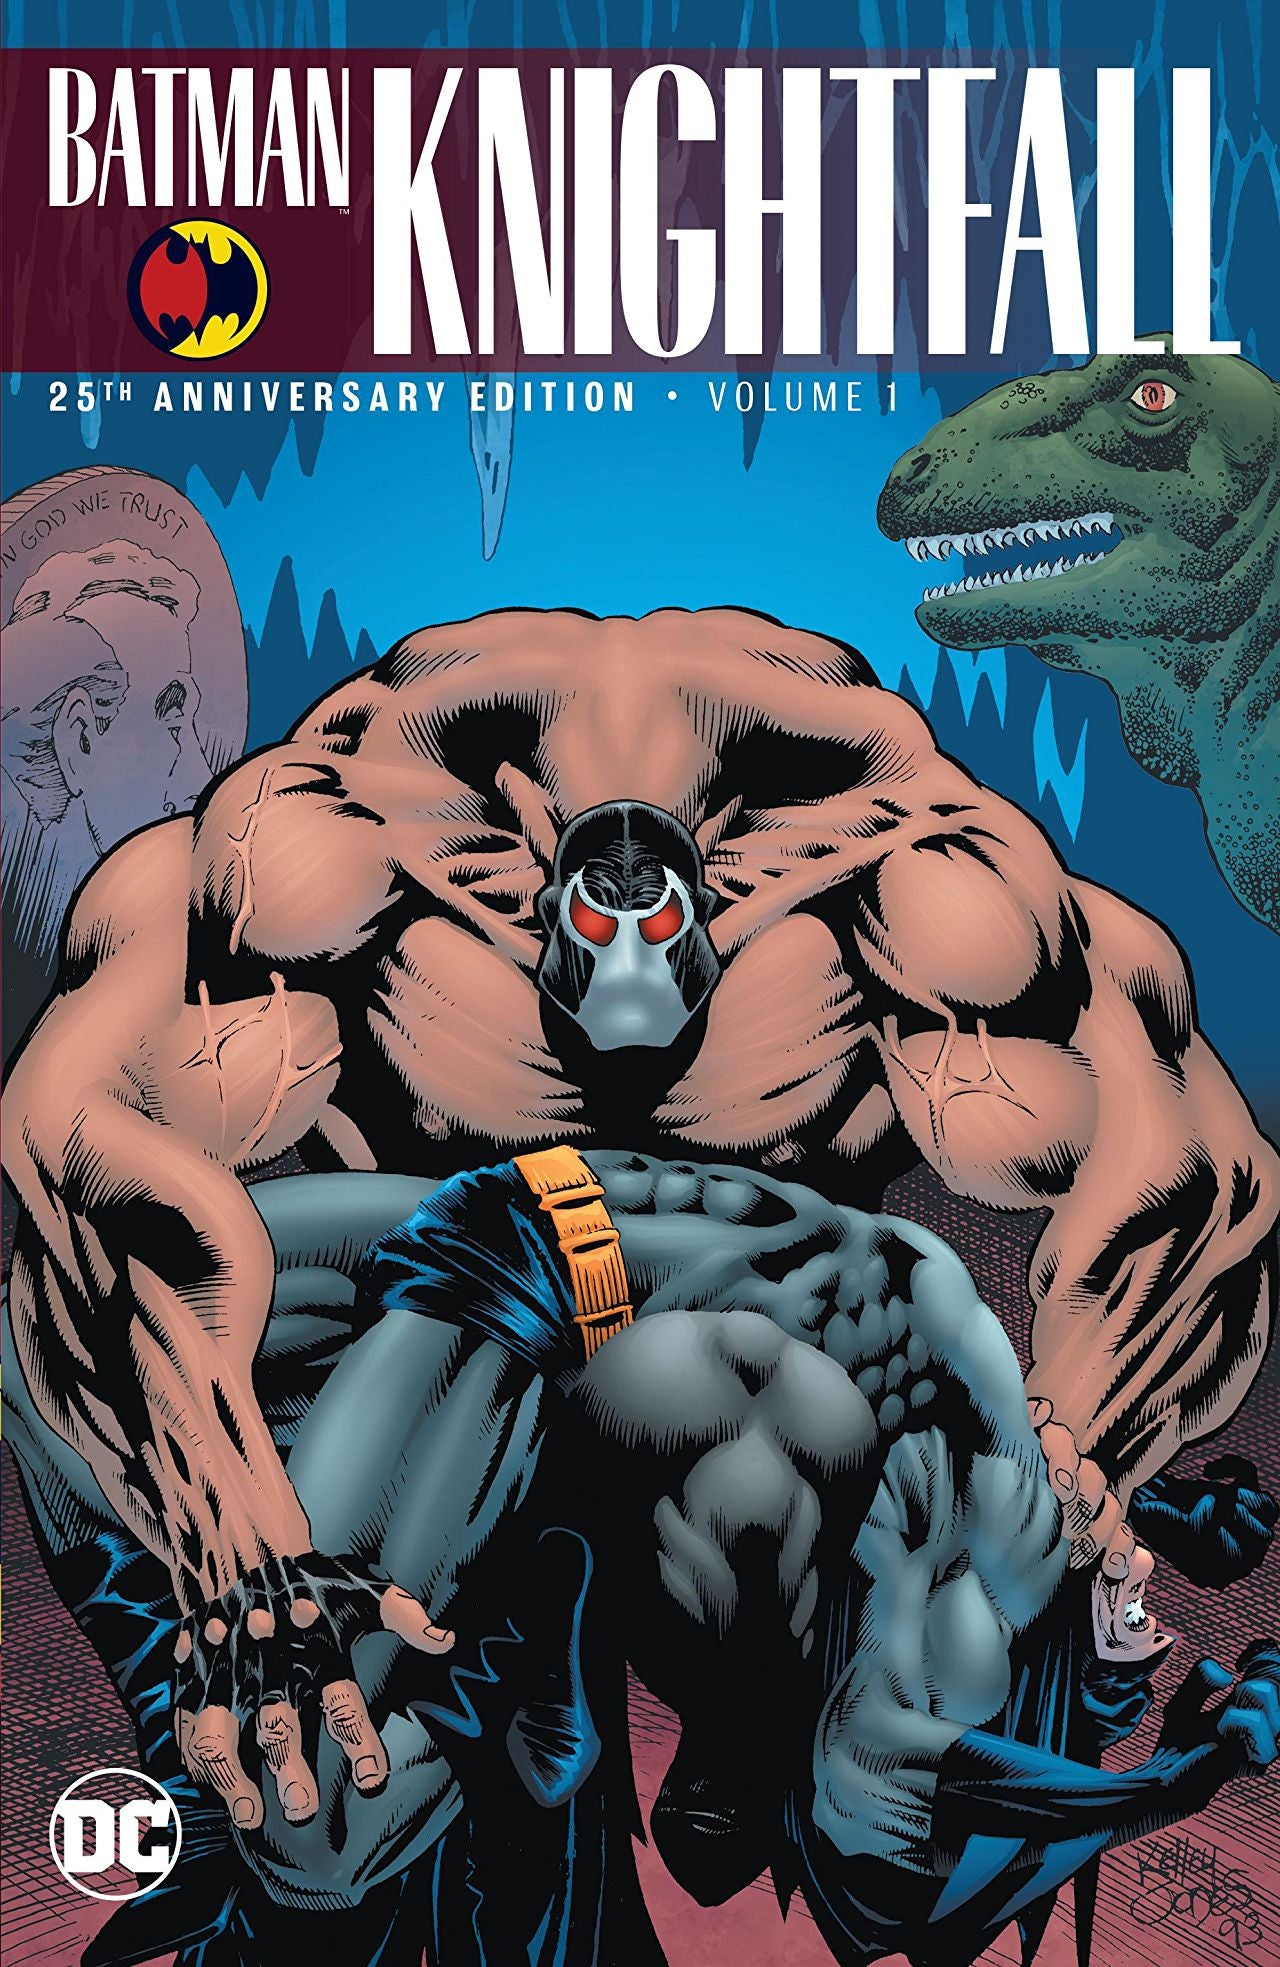 Batman: Knightfall Volume 1 - 25th Anniversary Edition